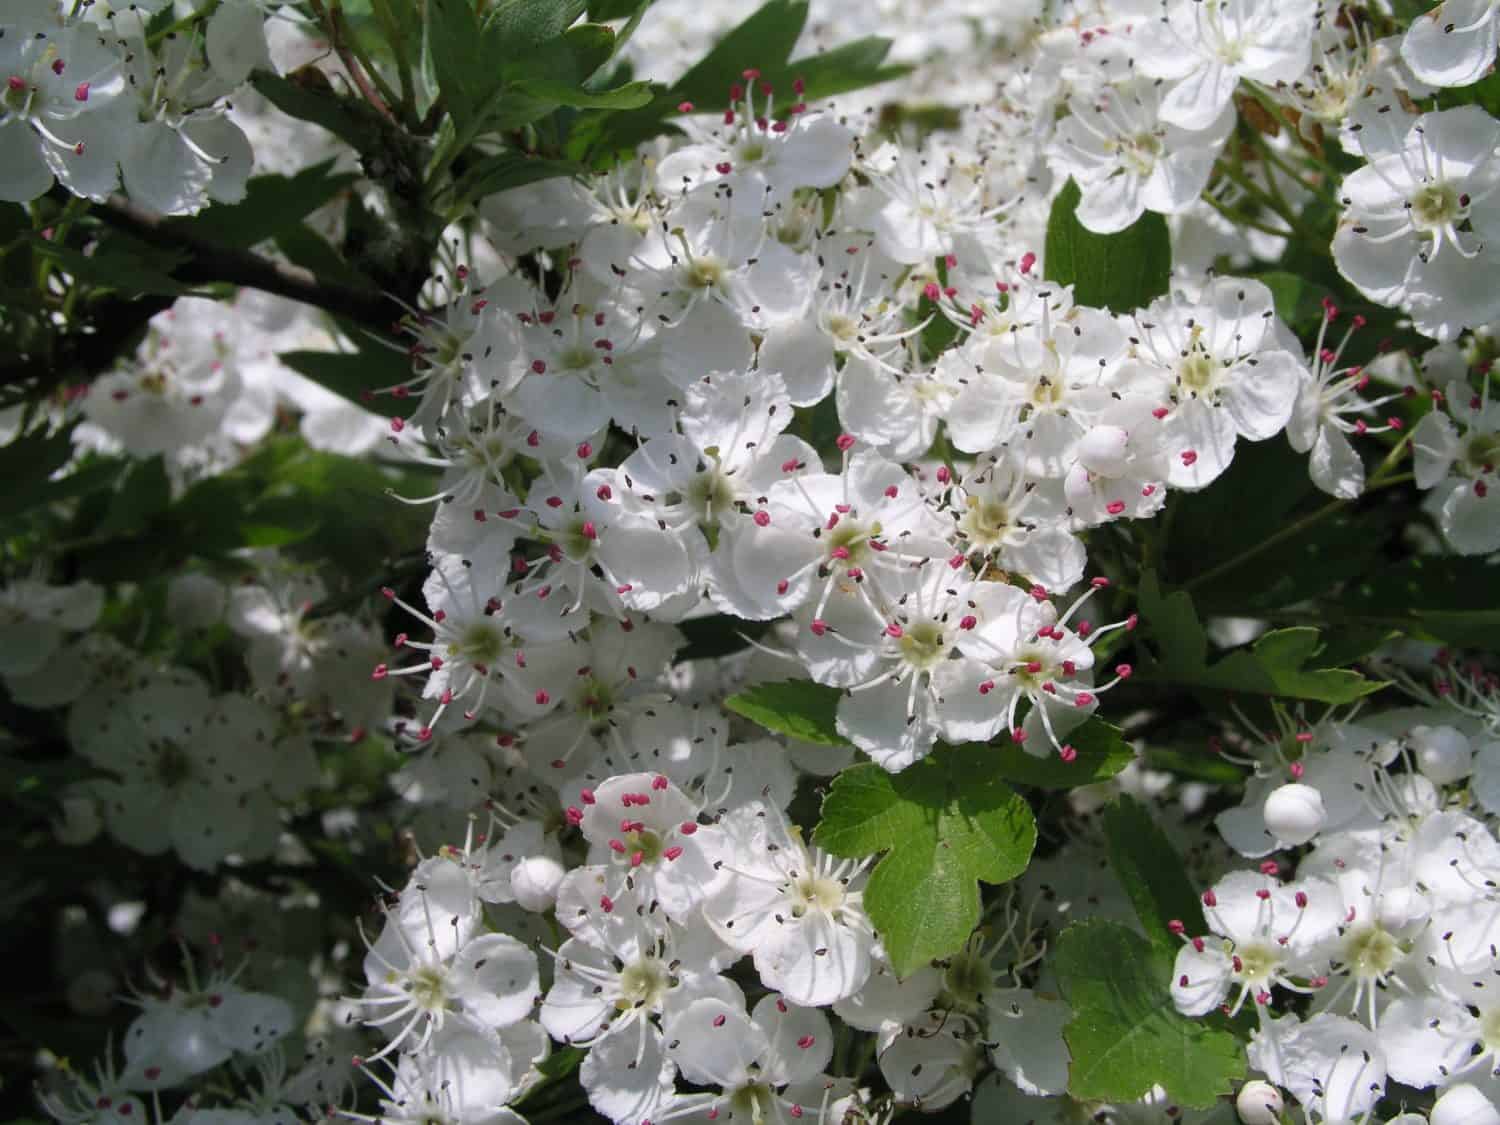 Blooming Crataegus, hawthorn, thornapple, May-tree, whitethorn, or hawberry beautiful white blossoms. C. coccinea, C. punctata, C. ambigua and C. douglasii